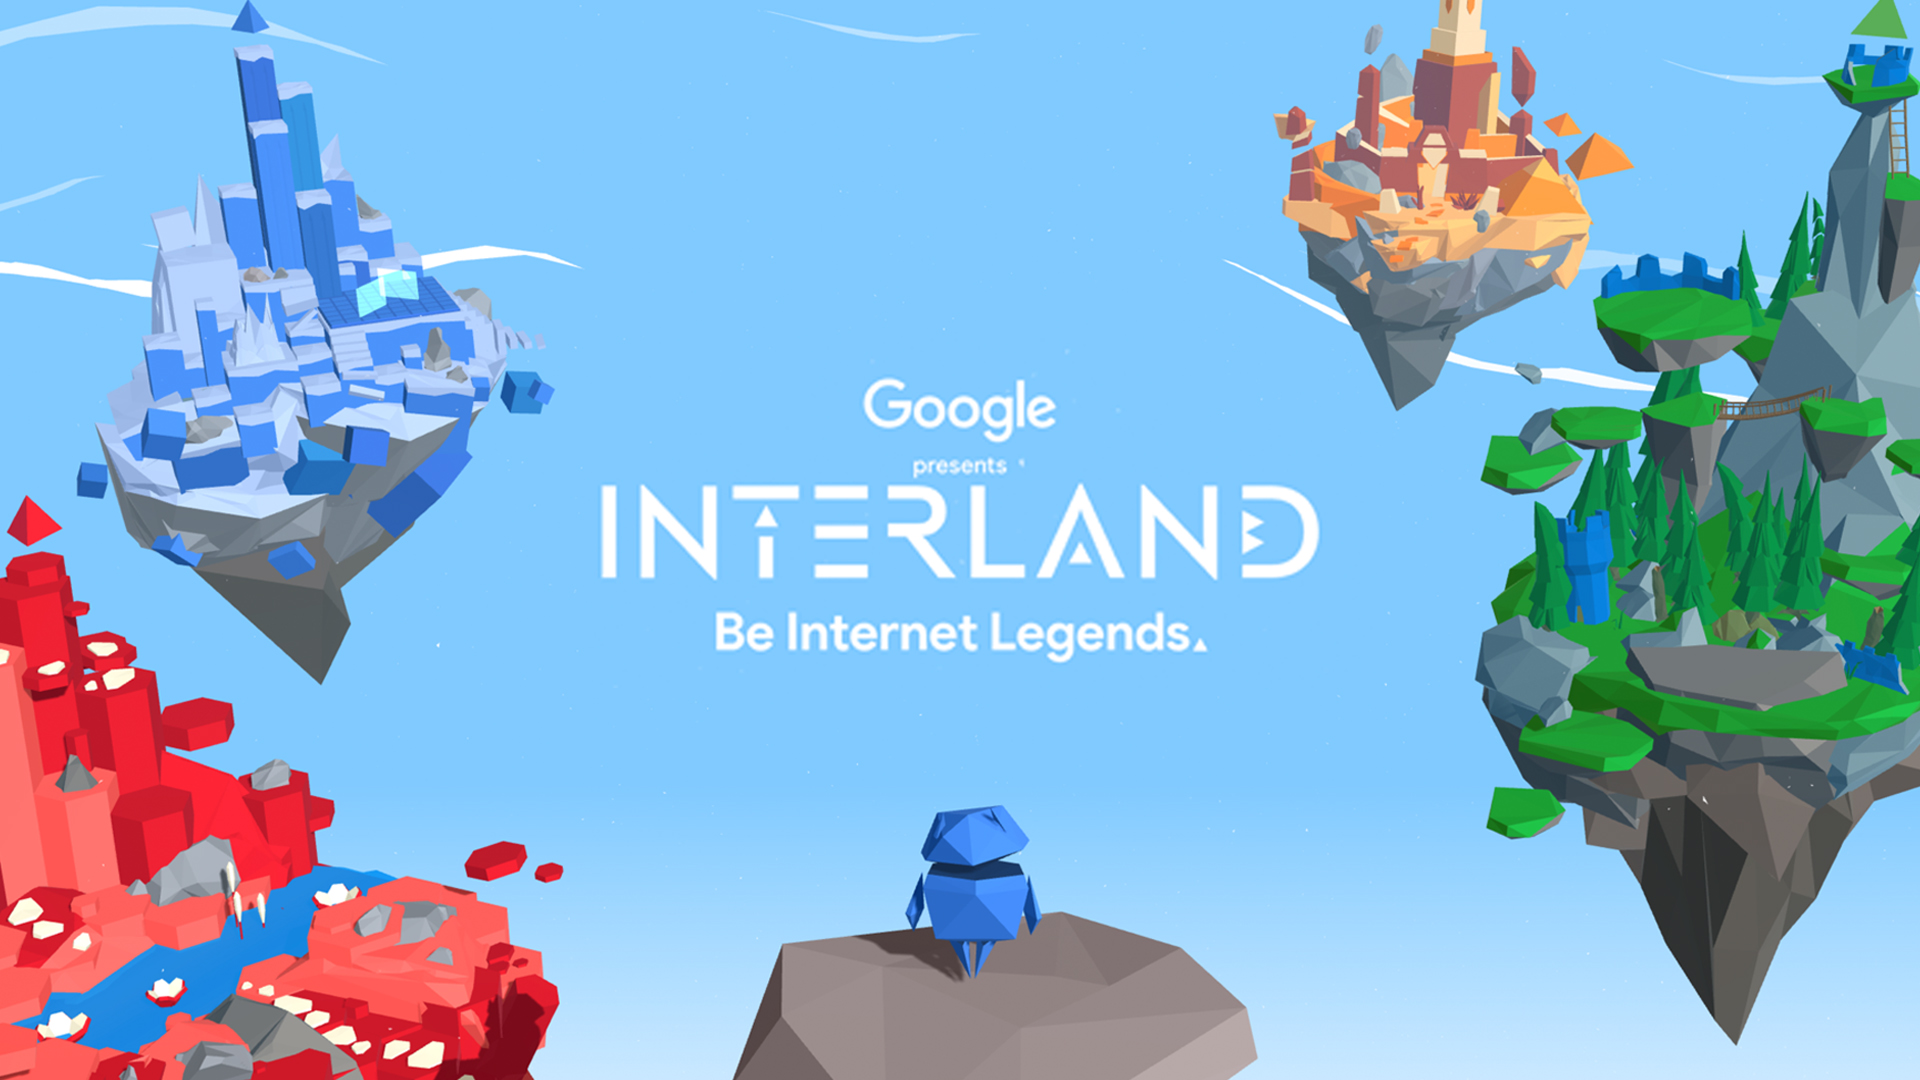 Interland logo